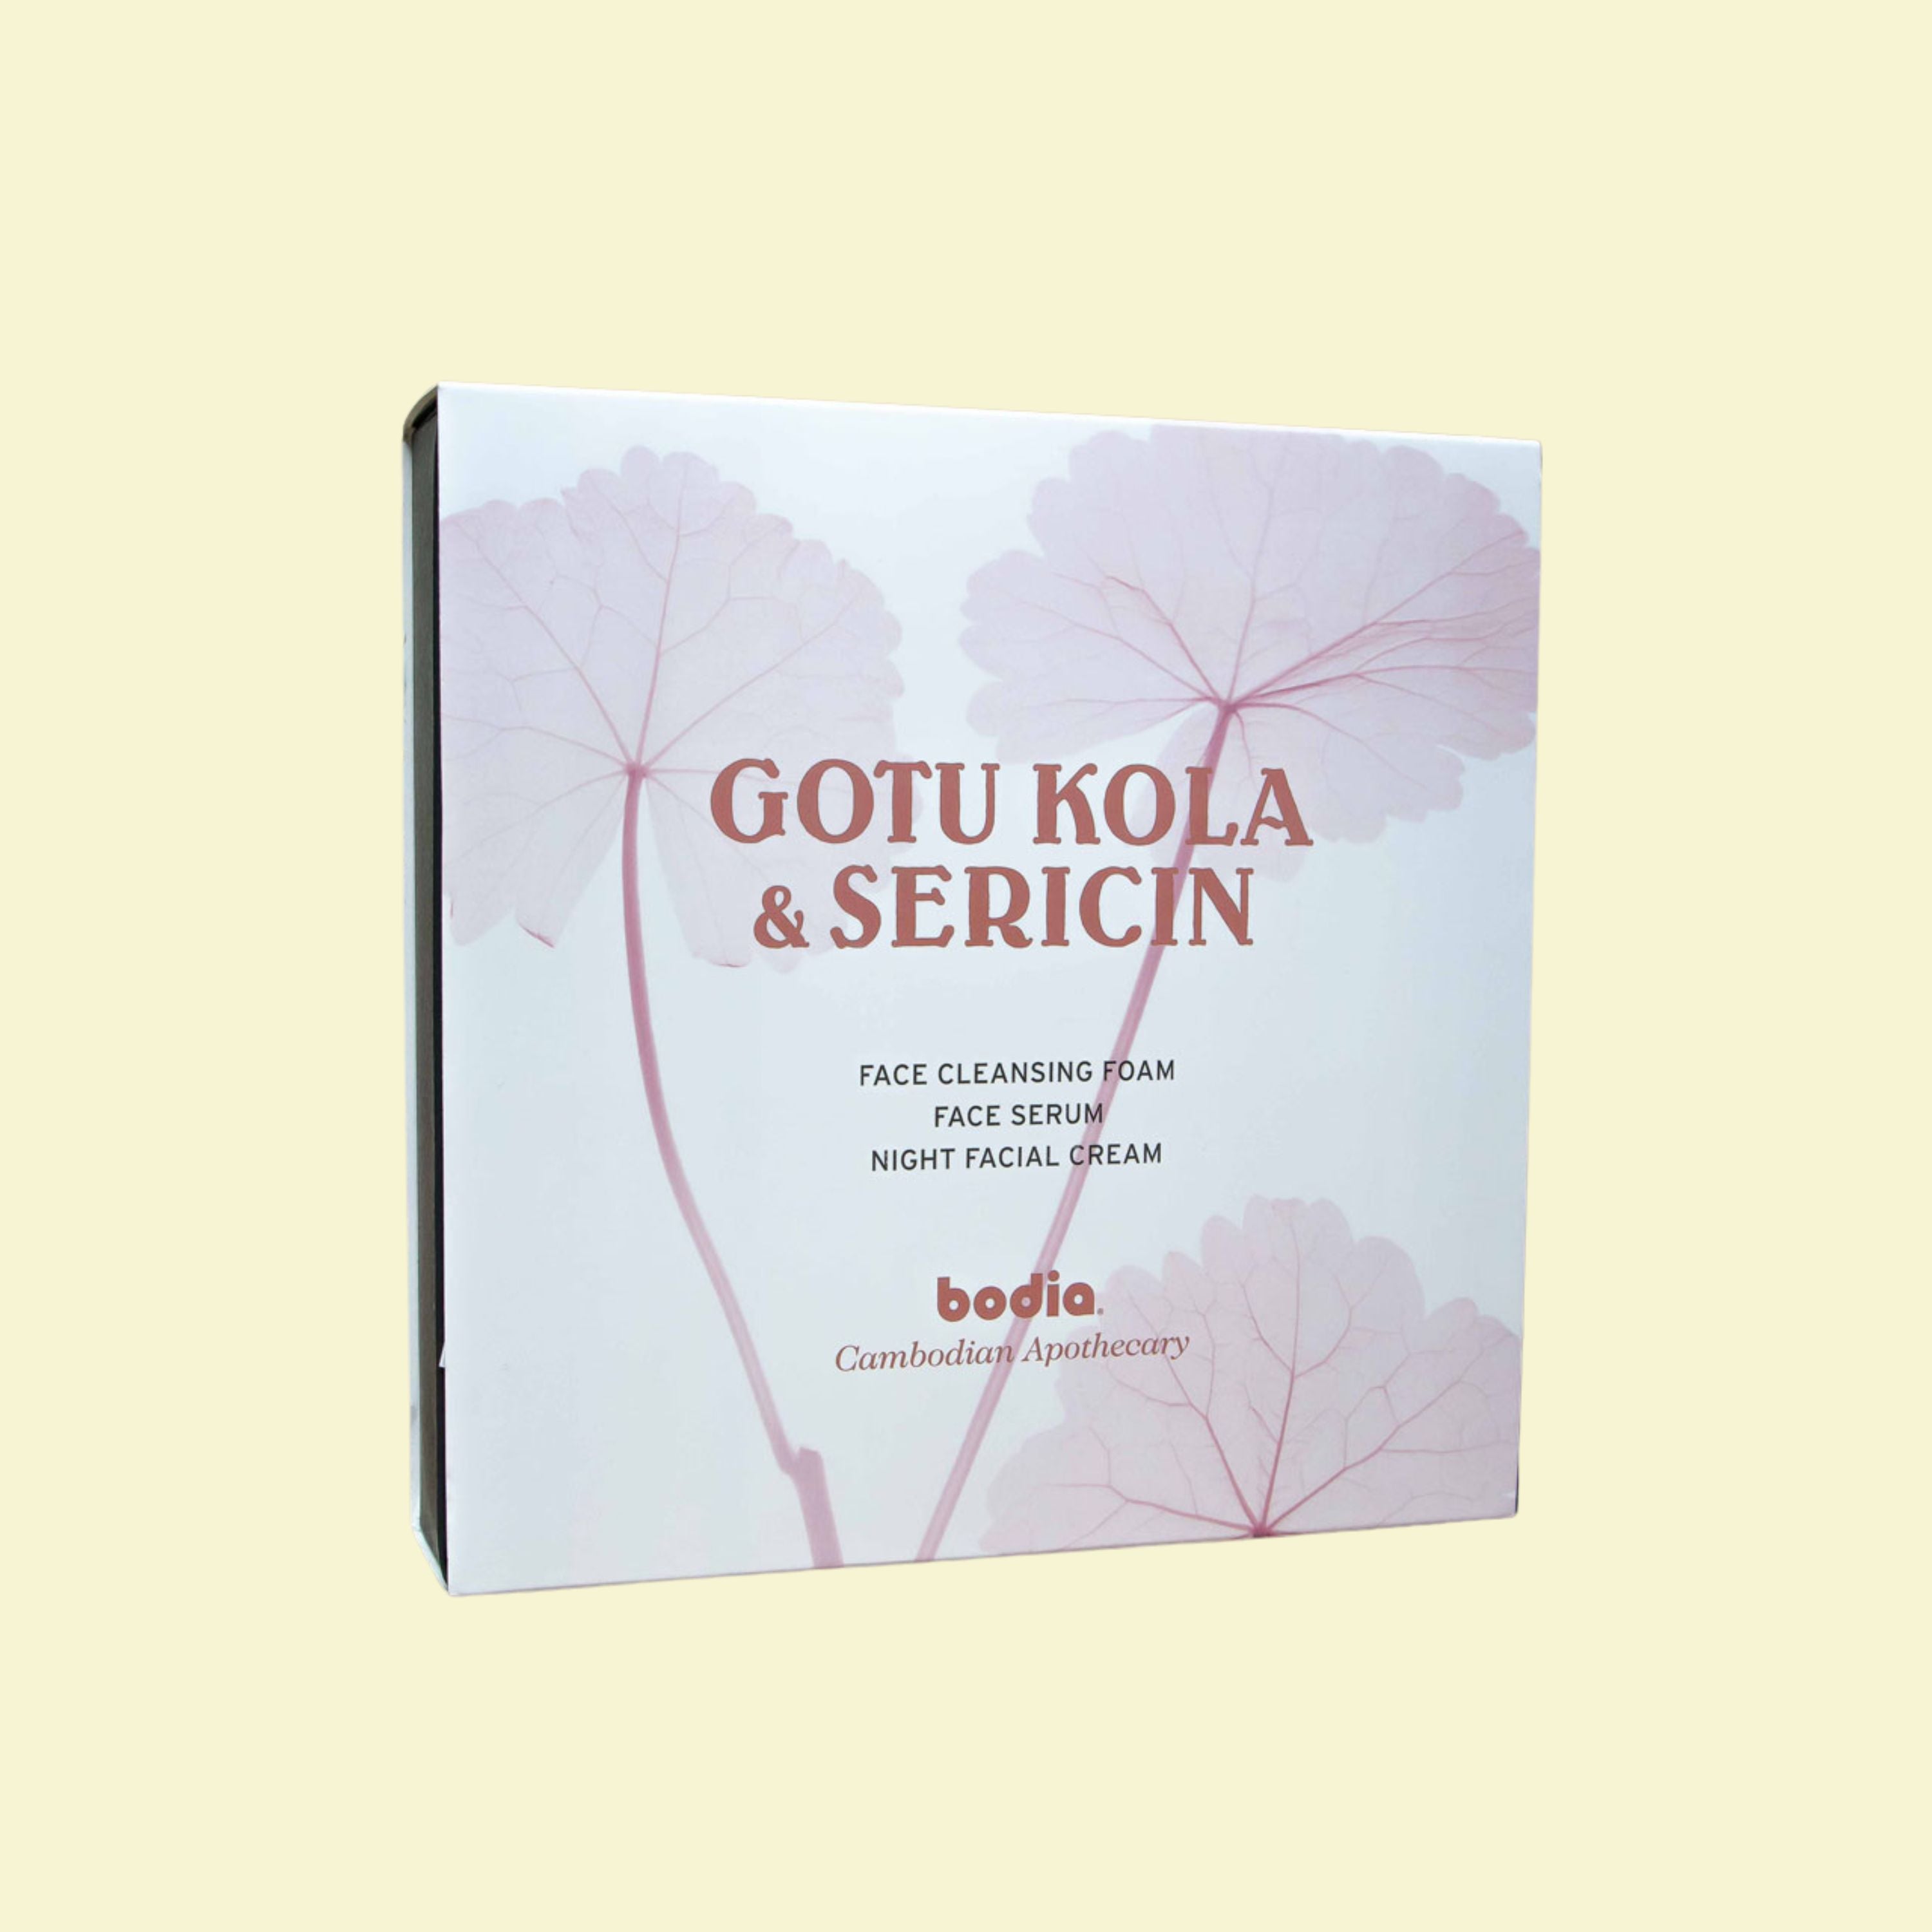 Gotu Kola and sericin facial set by bodia